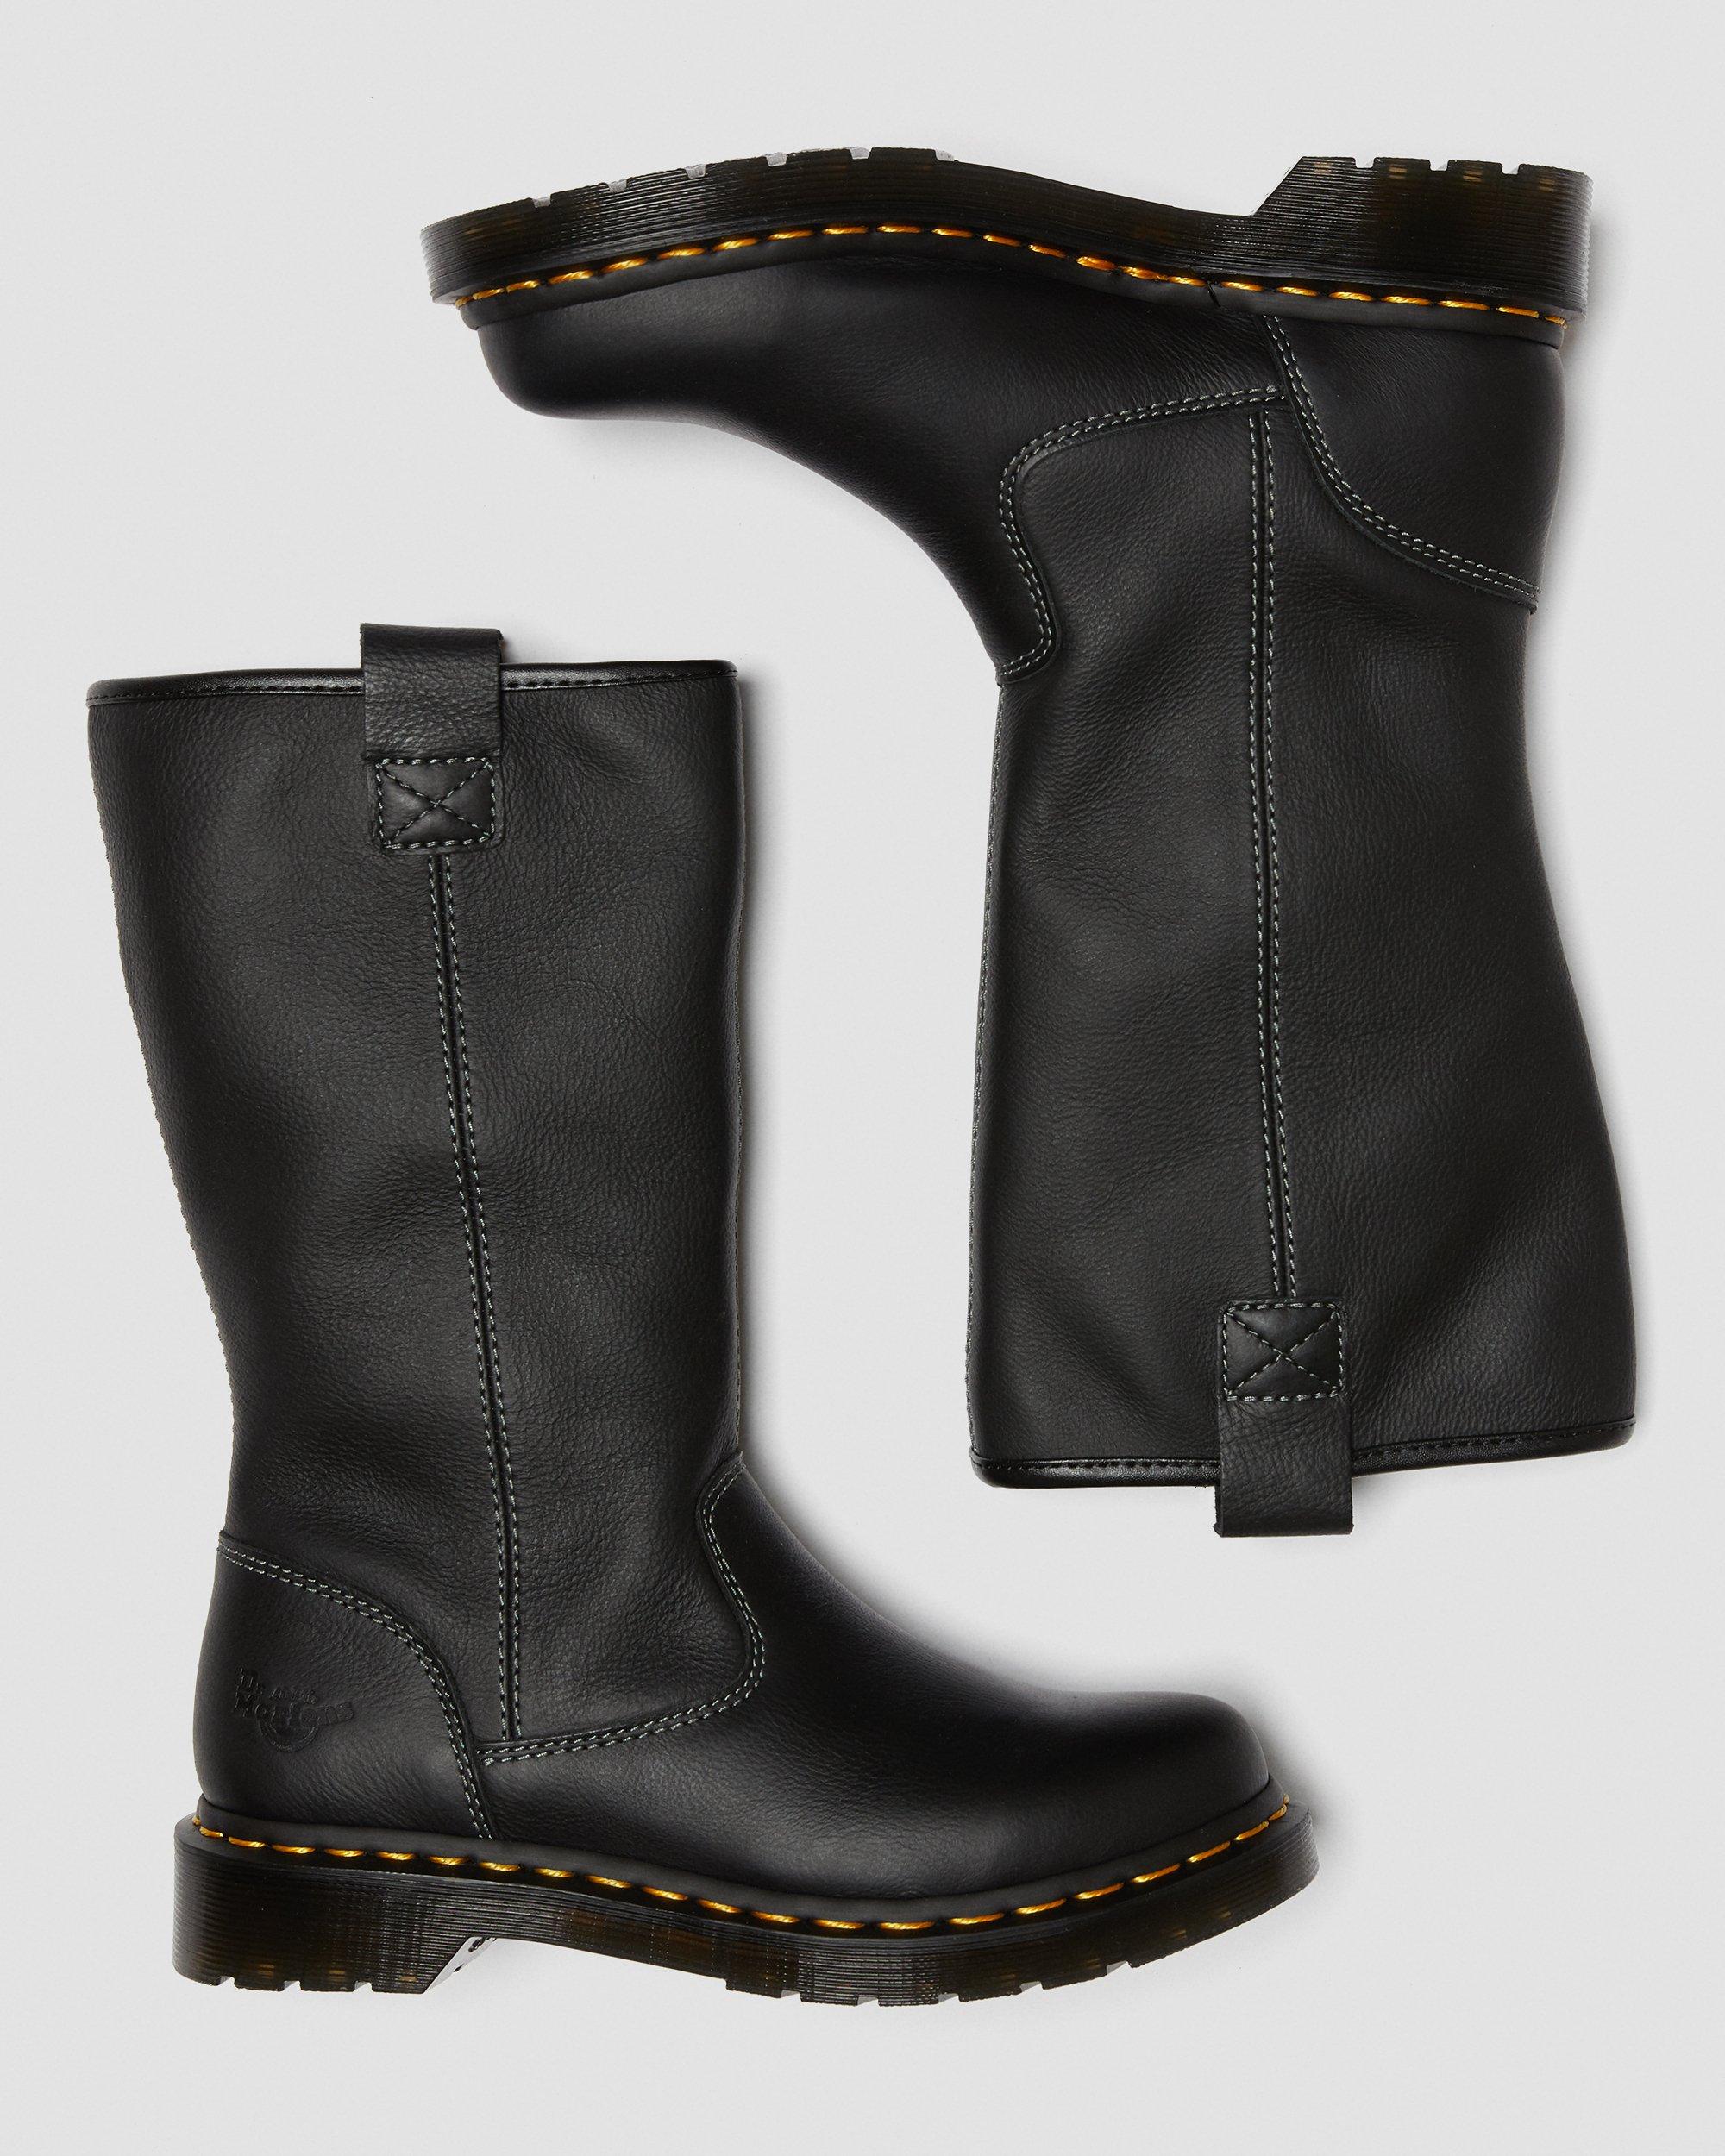 N°21, Black Women's Boots